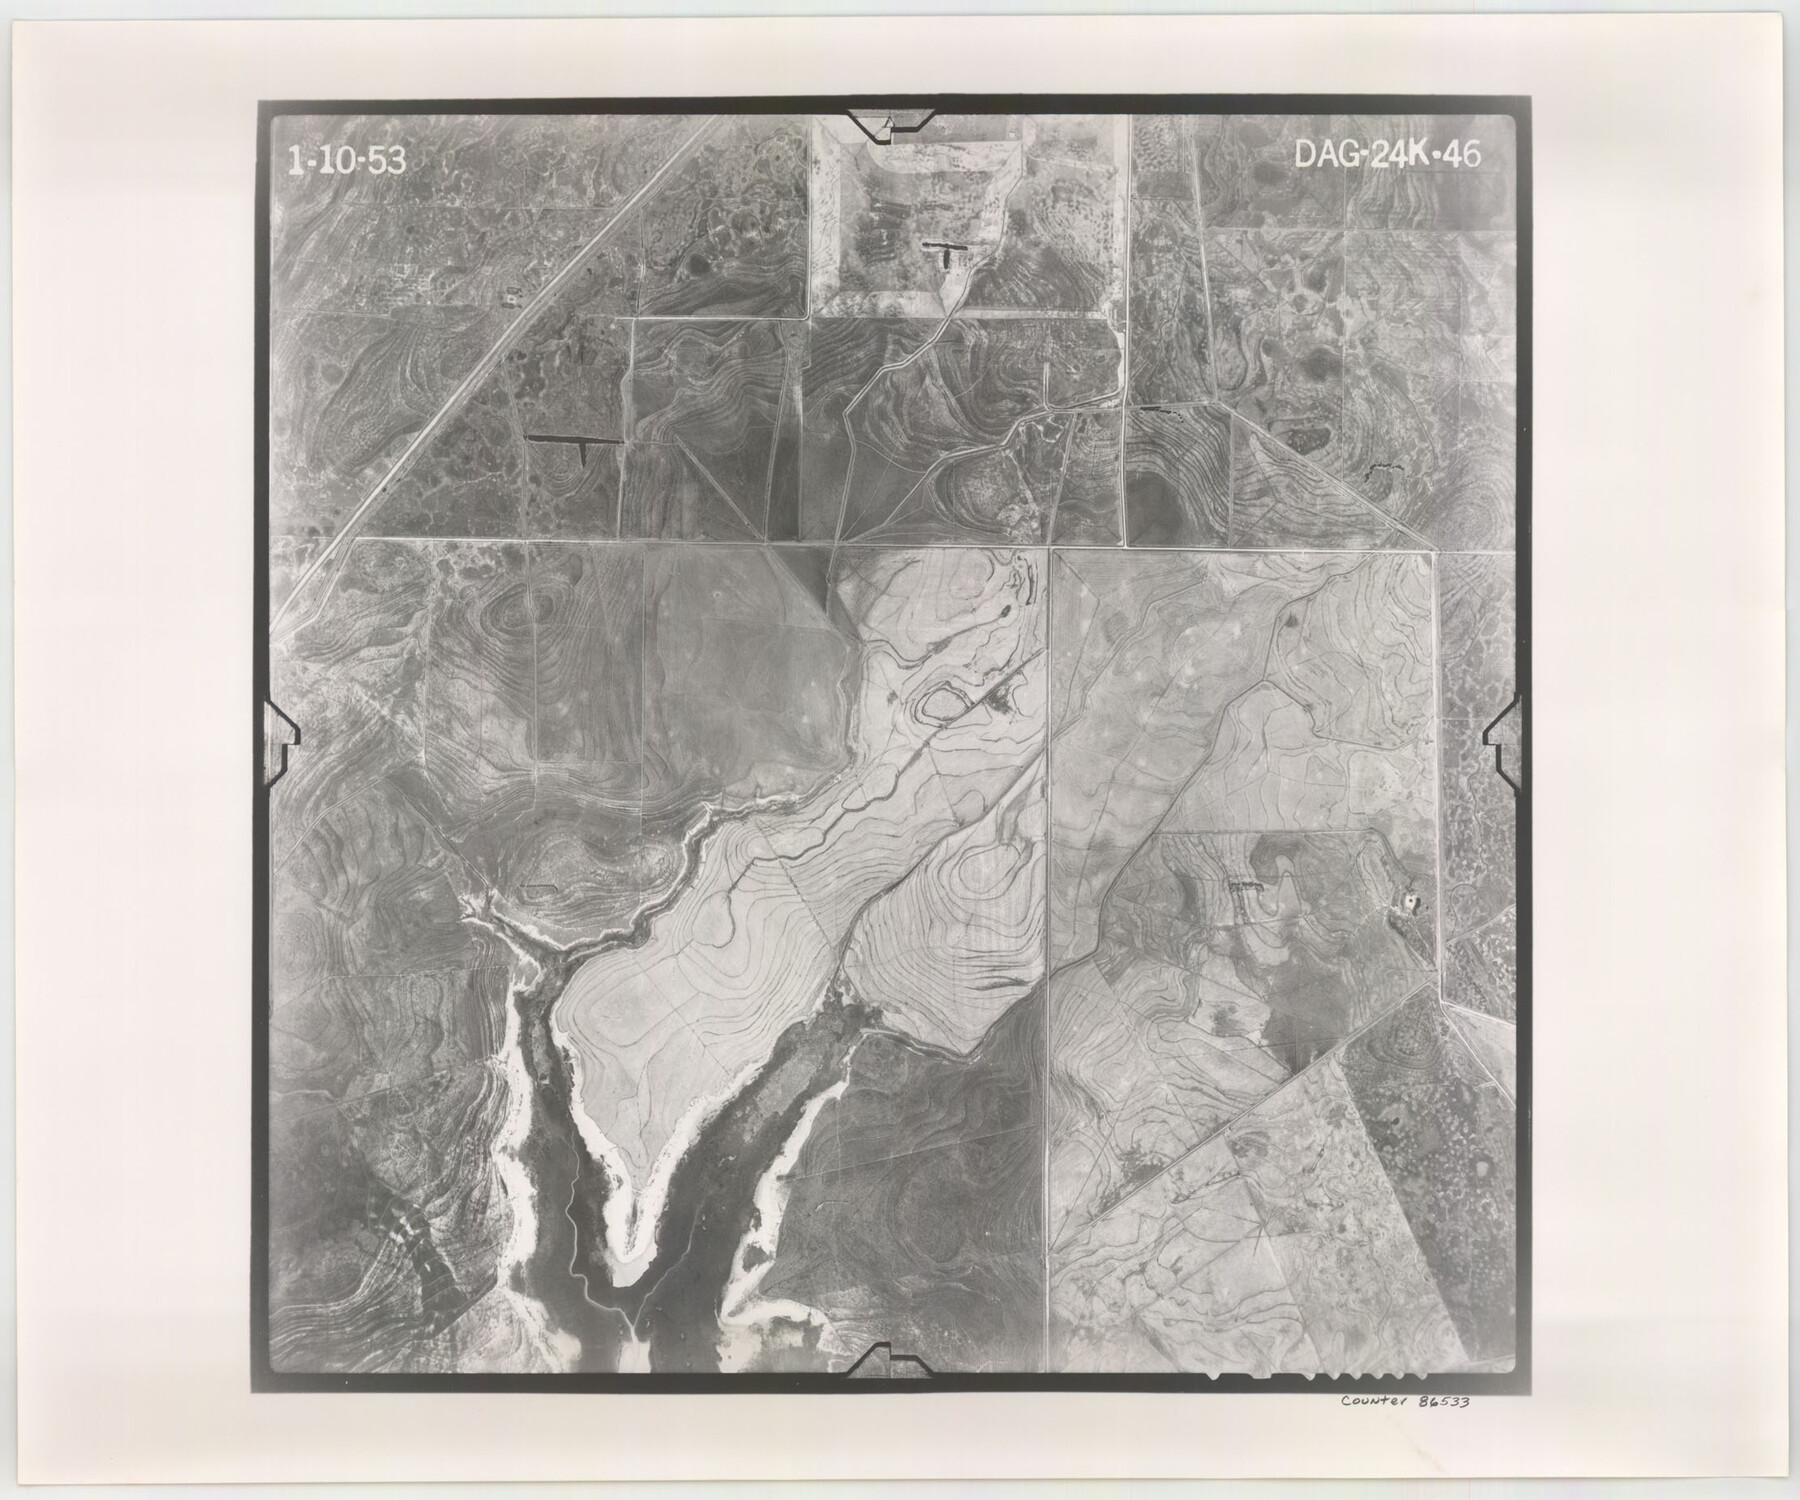 86533, Flight Mission No. DAG-24K, Frame 46, Matagorda County, General Map Collection